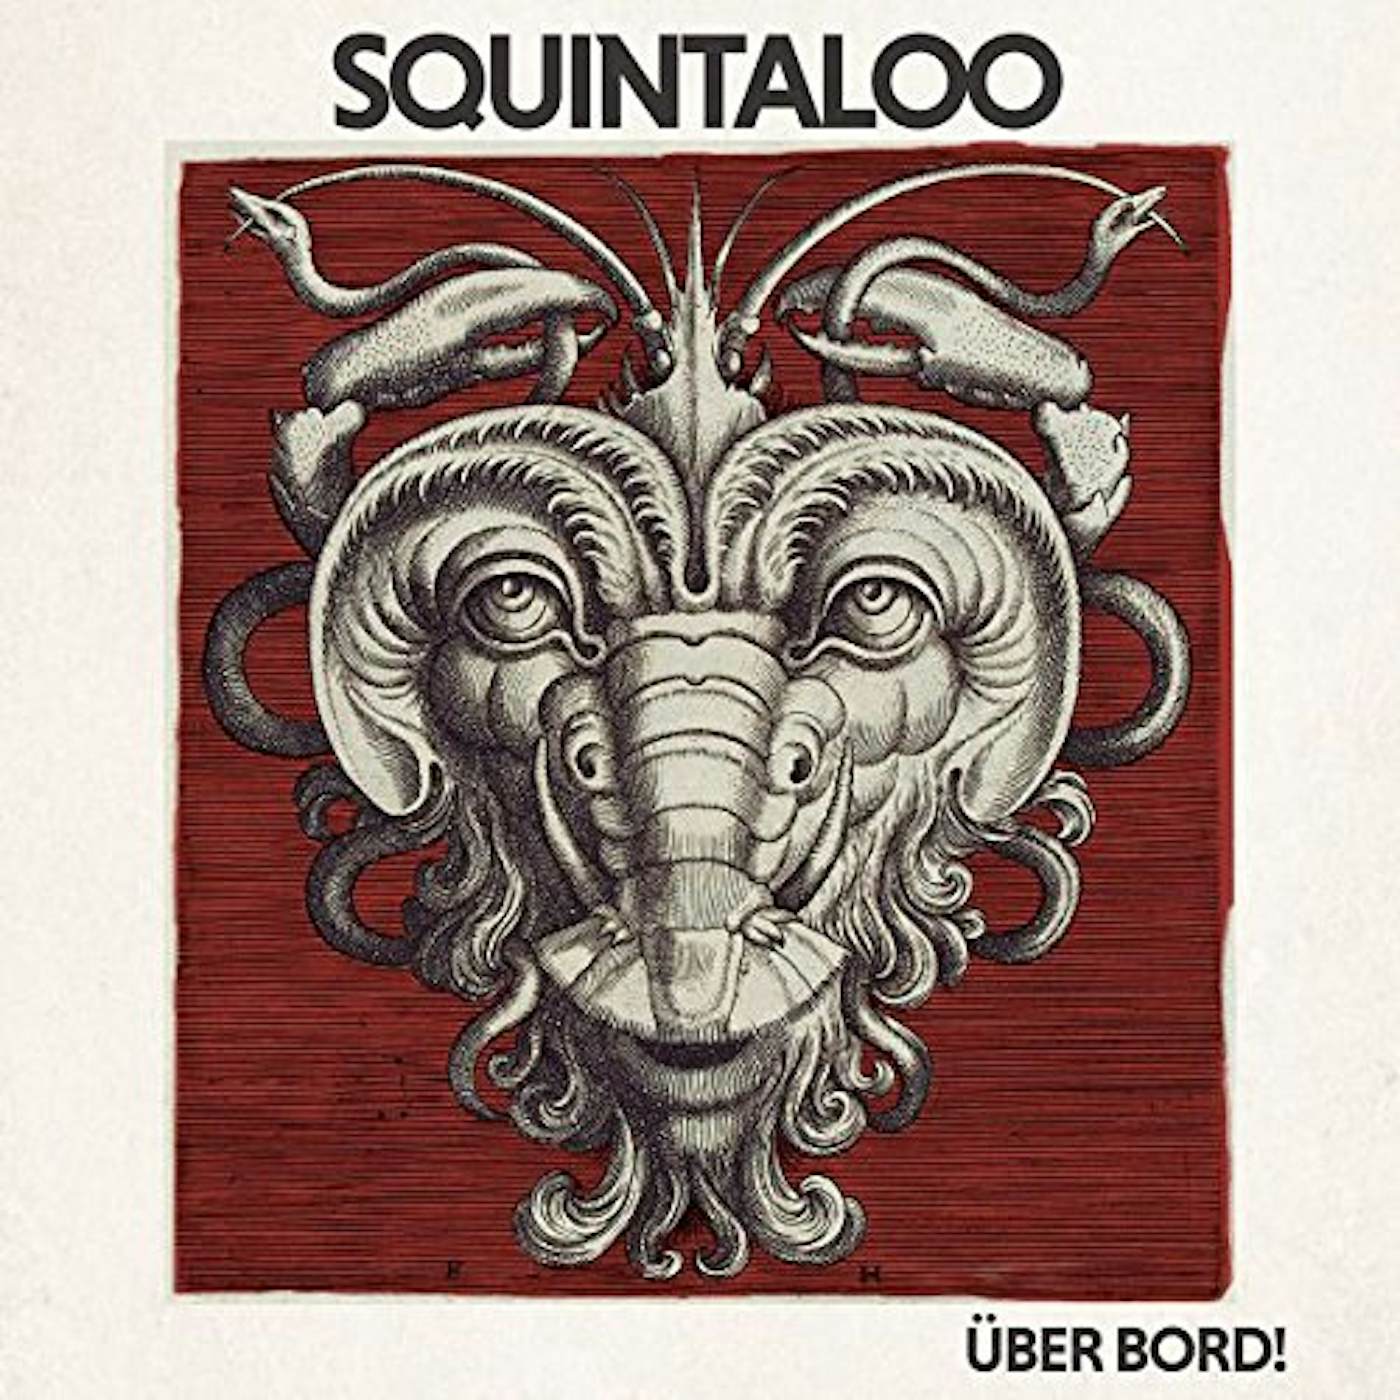 Squintaloo UBER BORD Vinyl Record